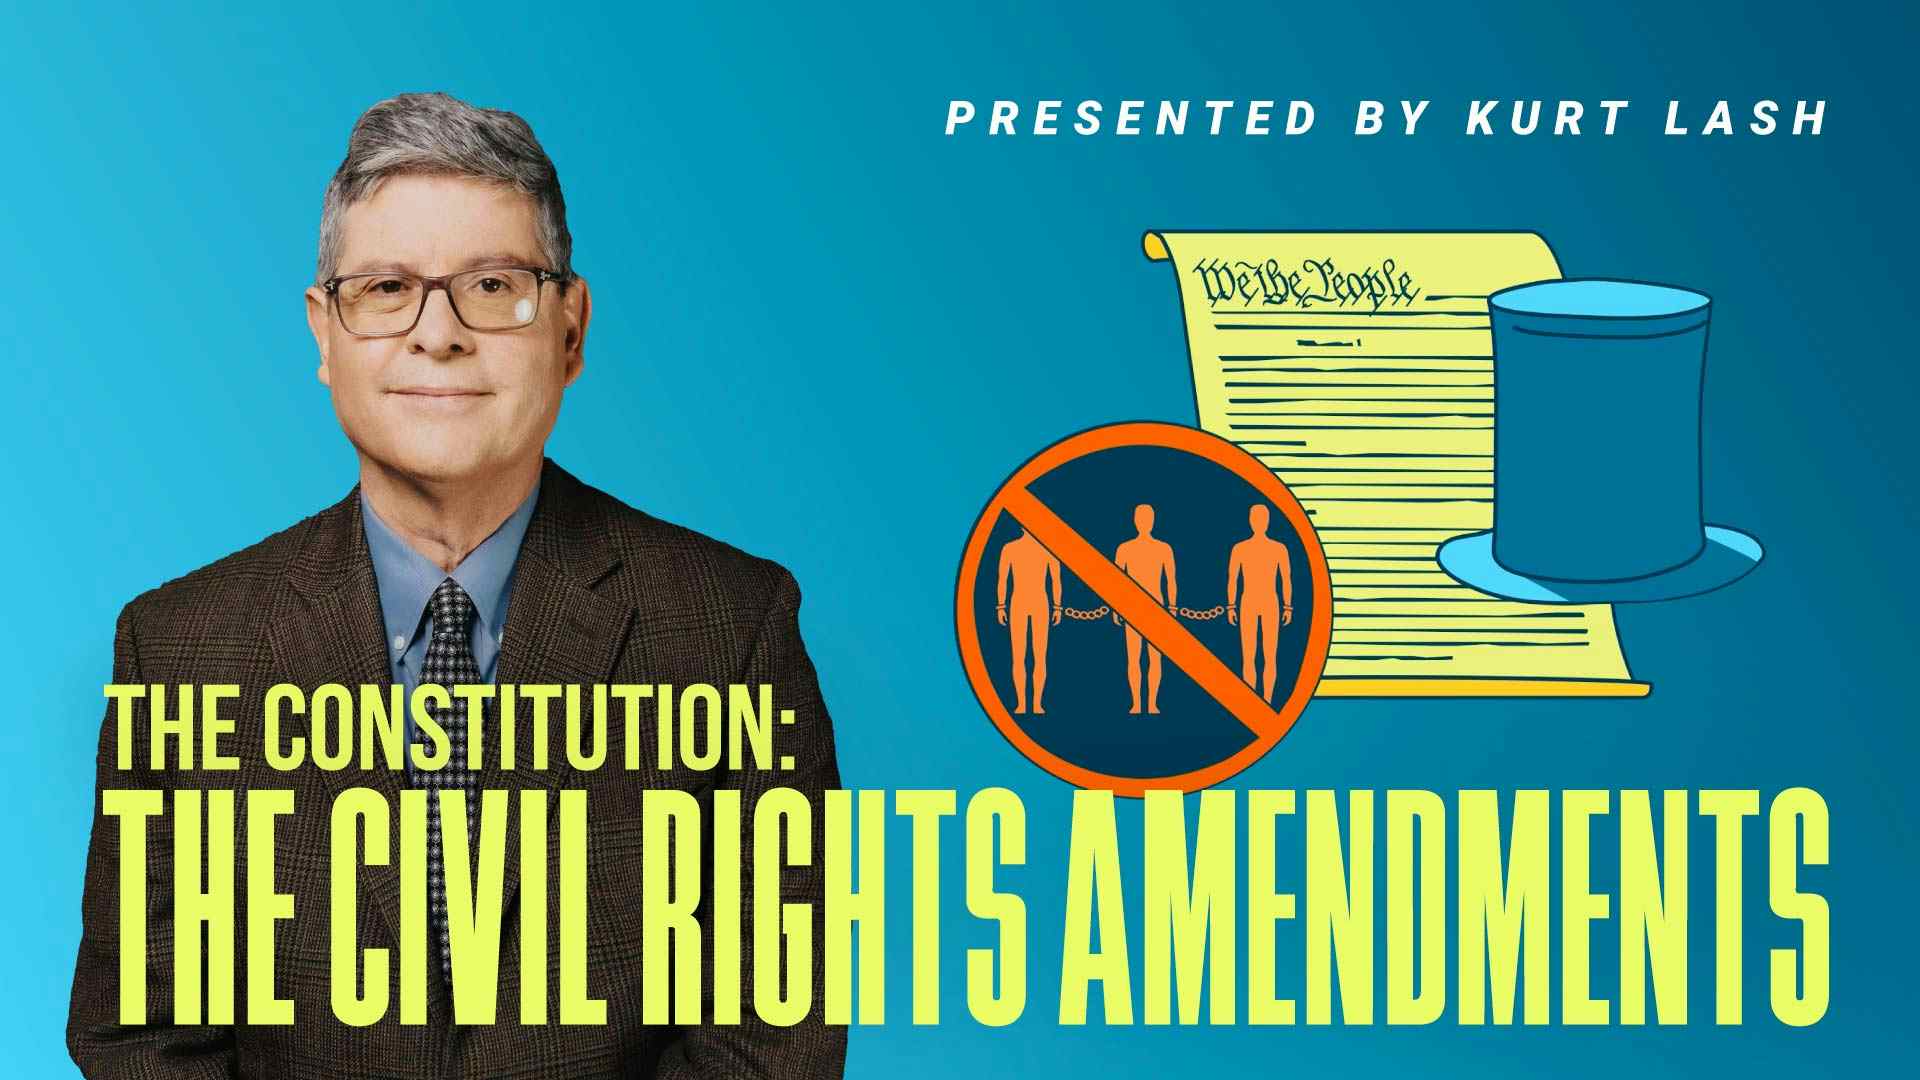 The Constitution: The Civil Rights Amendments